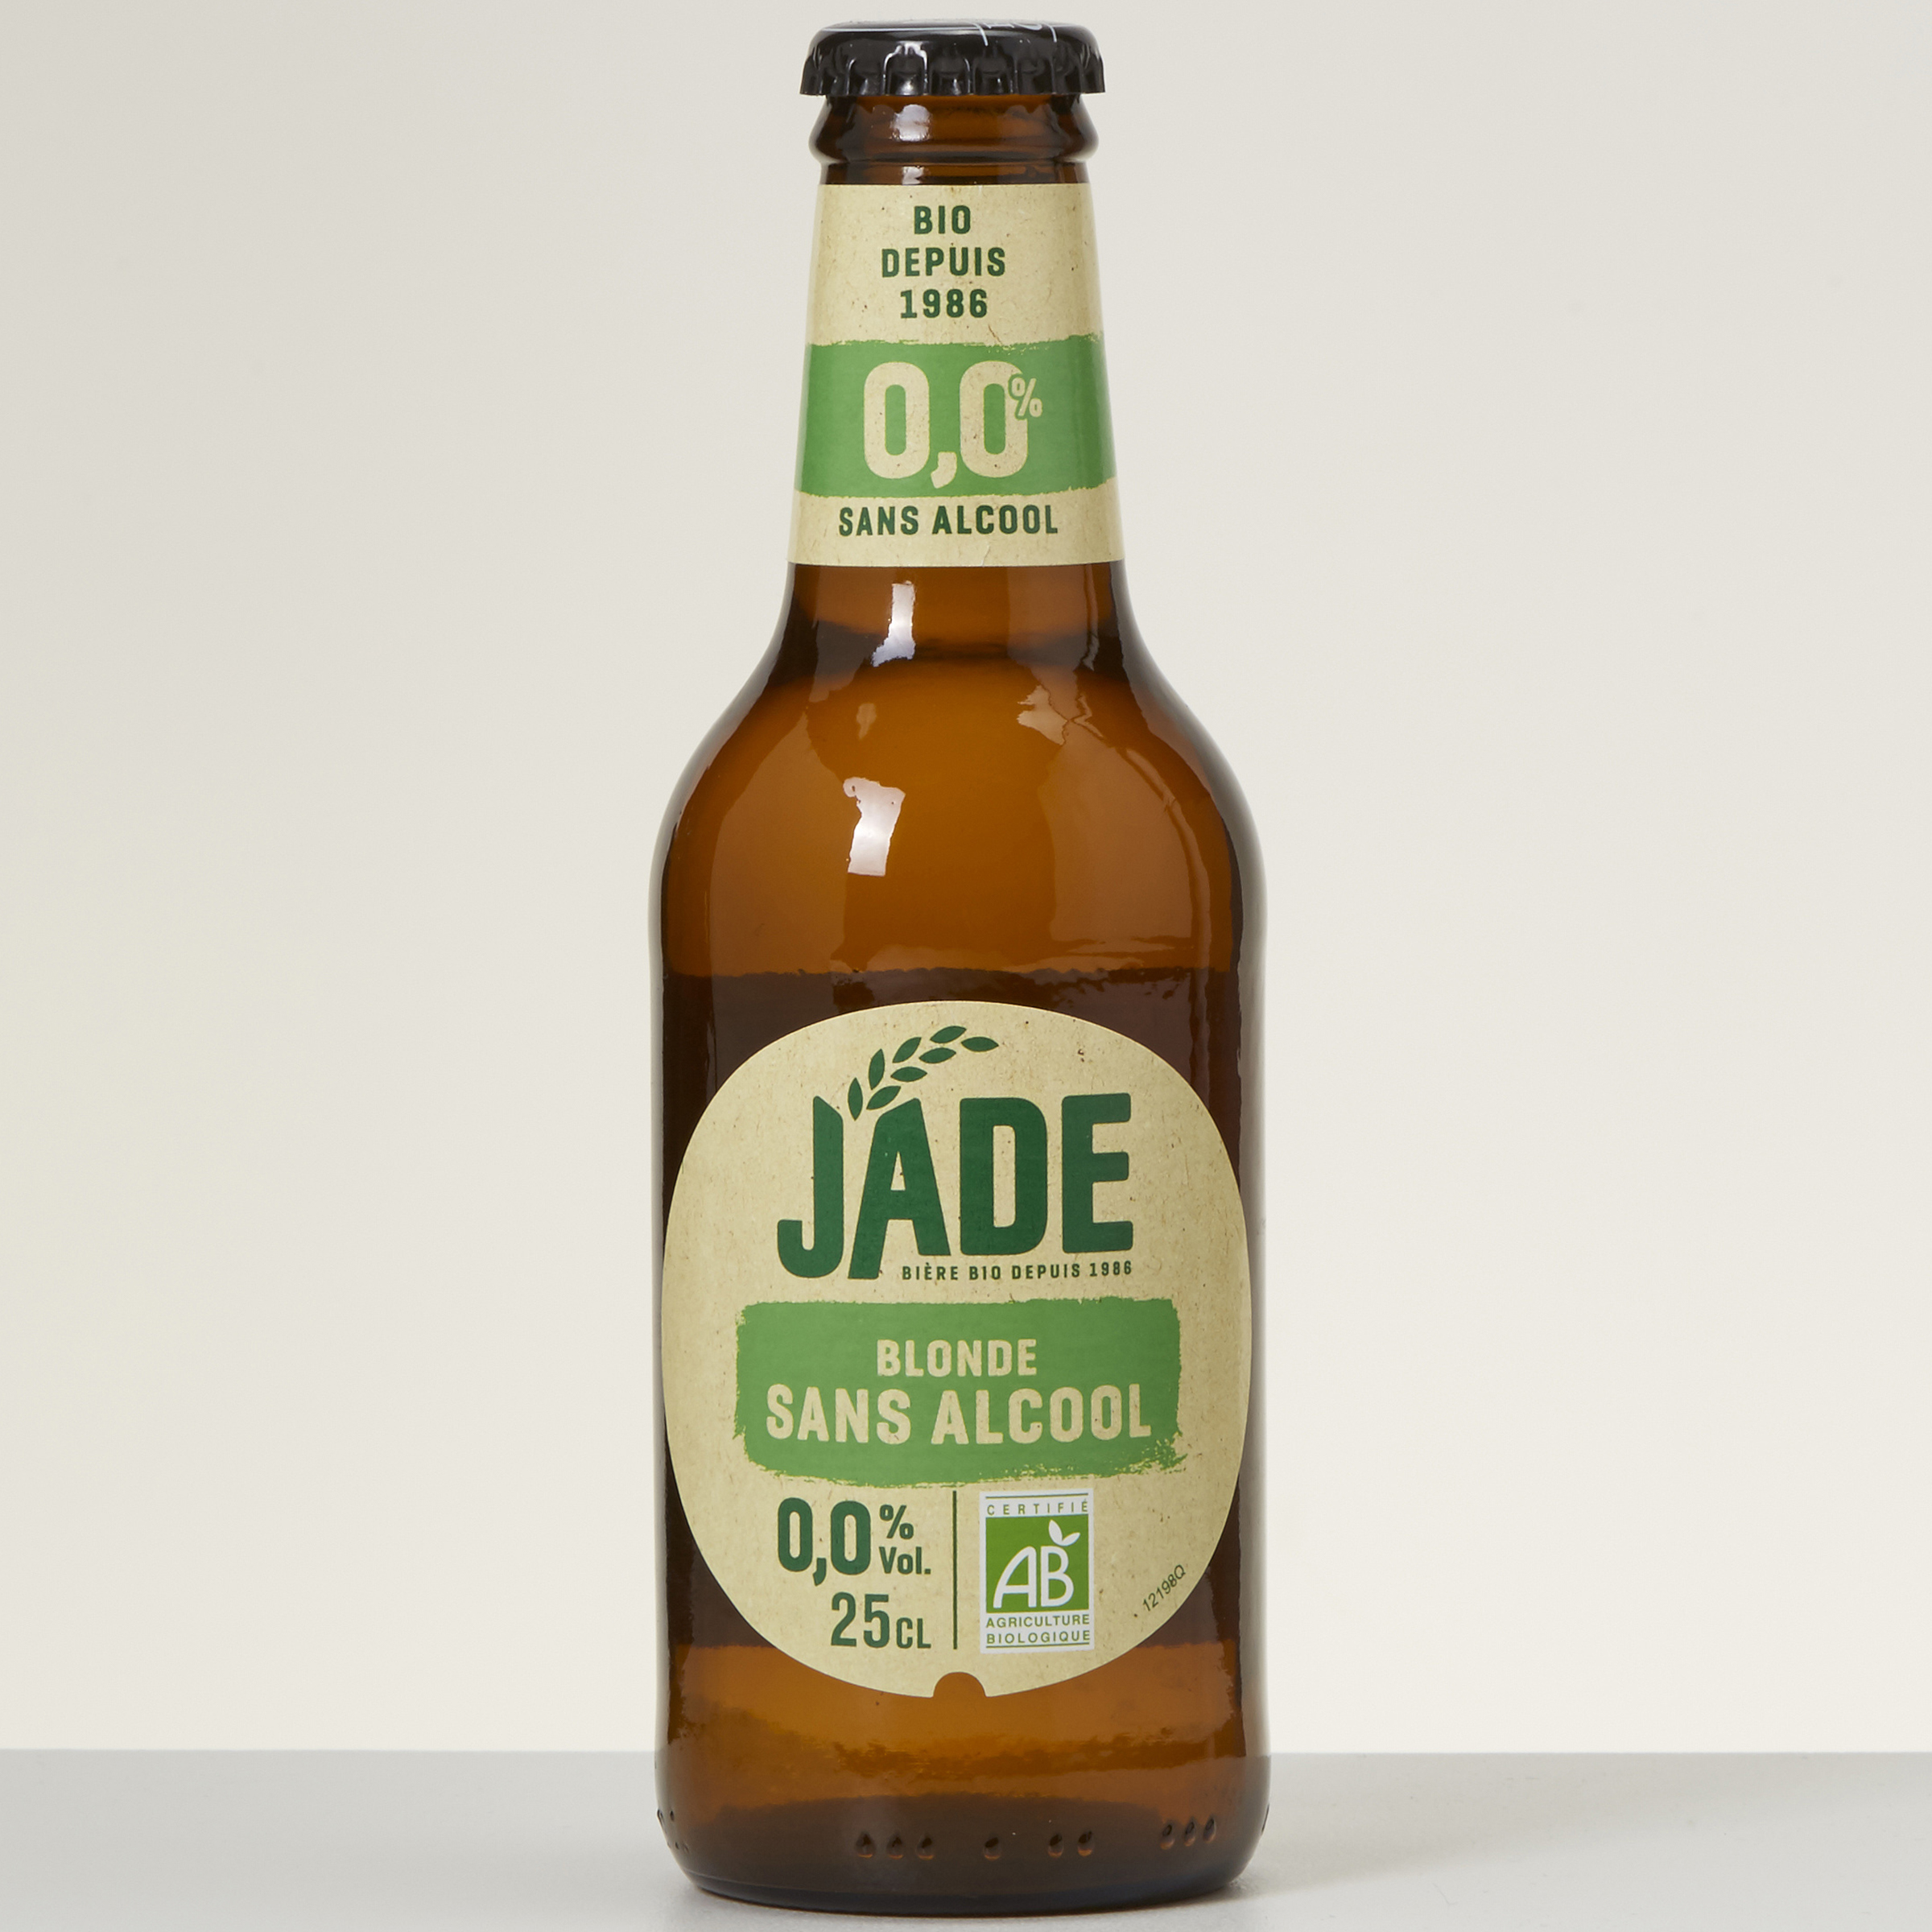 Jade Blonde sans alcool  - 